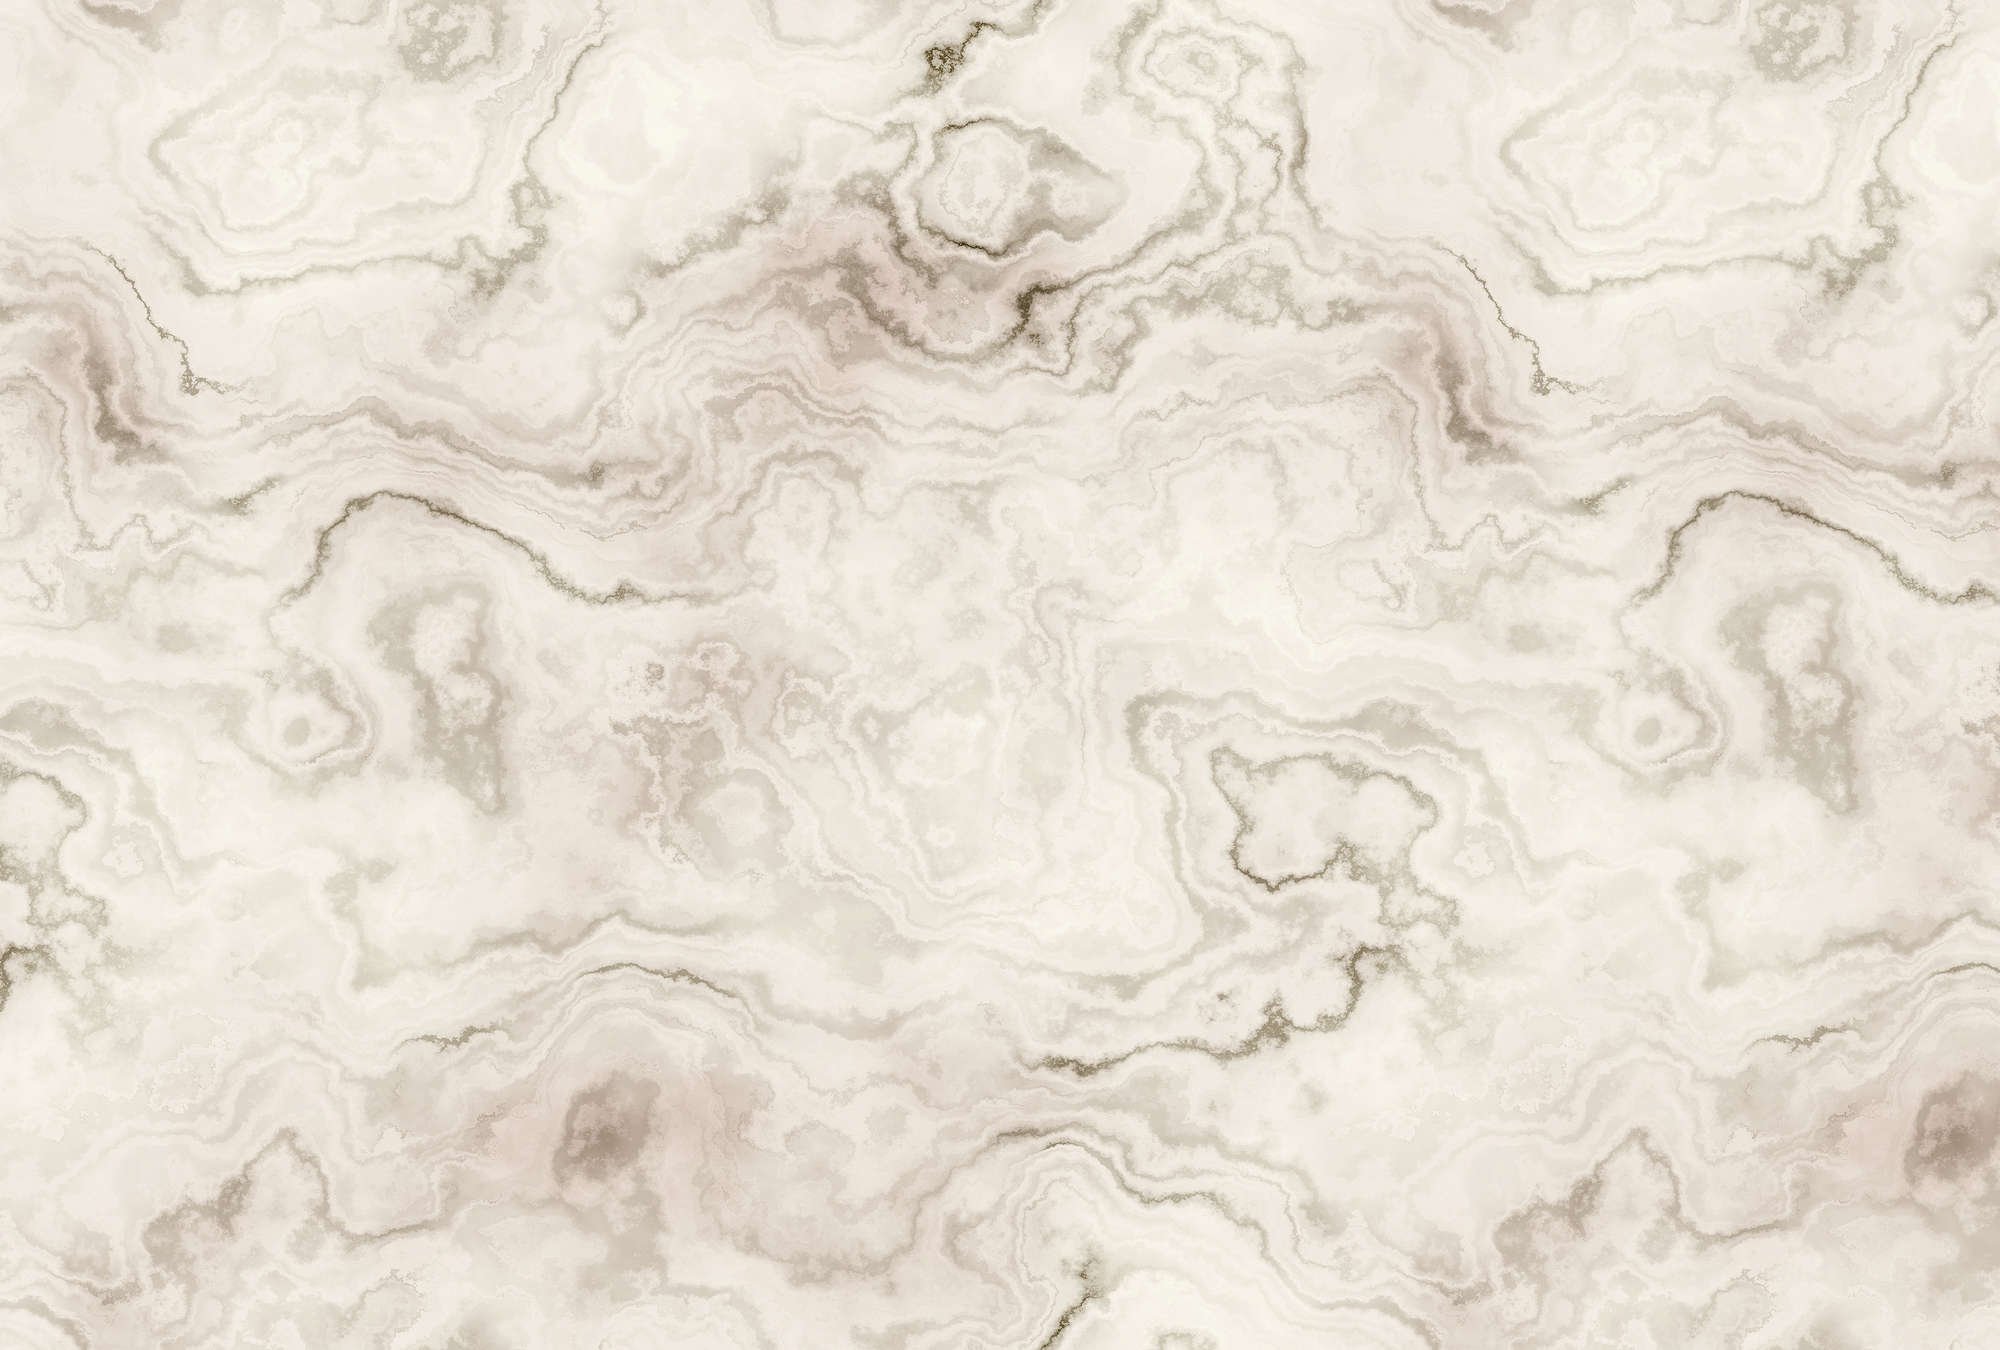             Carrara 2 - Elegant marble-look wallpaper - Beige, Brown | Premium smooth non-woven
        